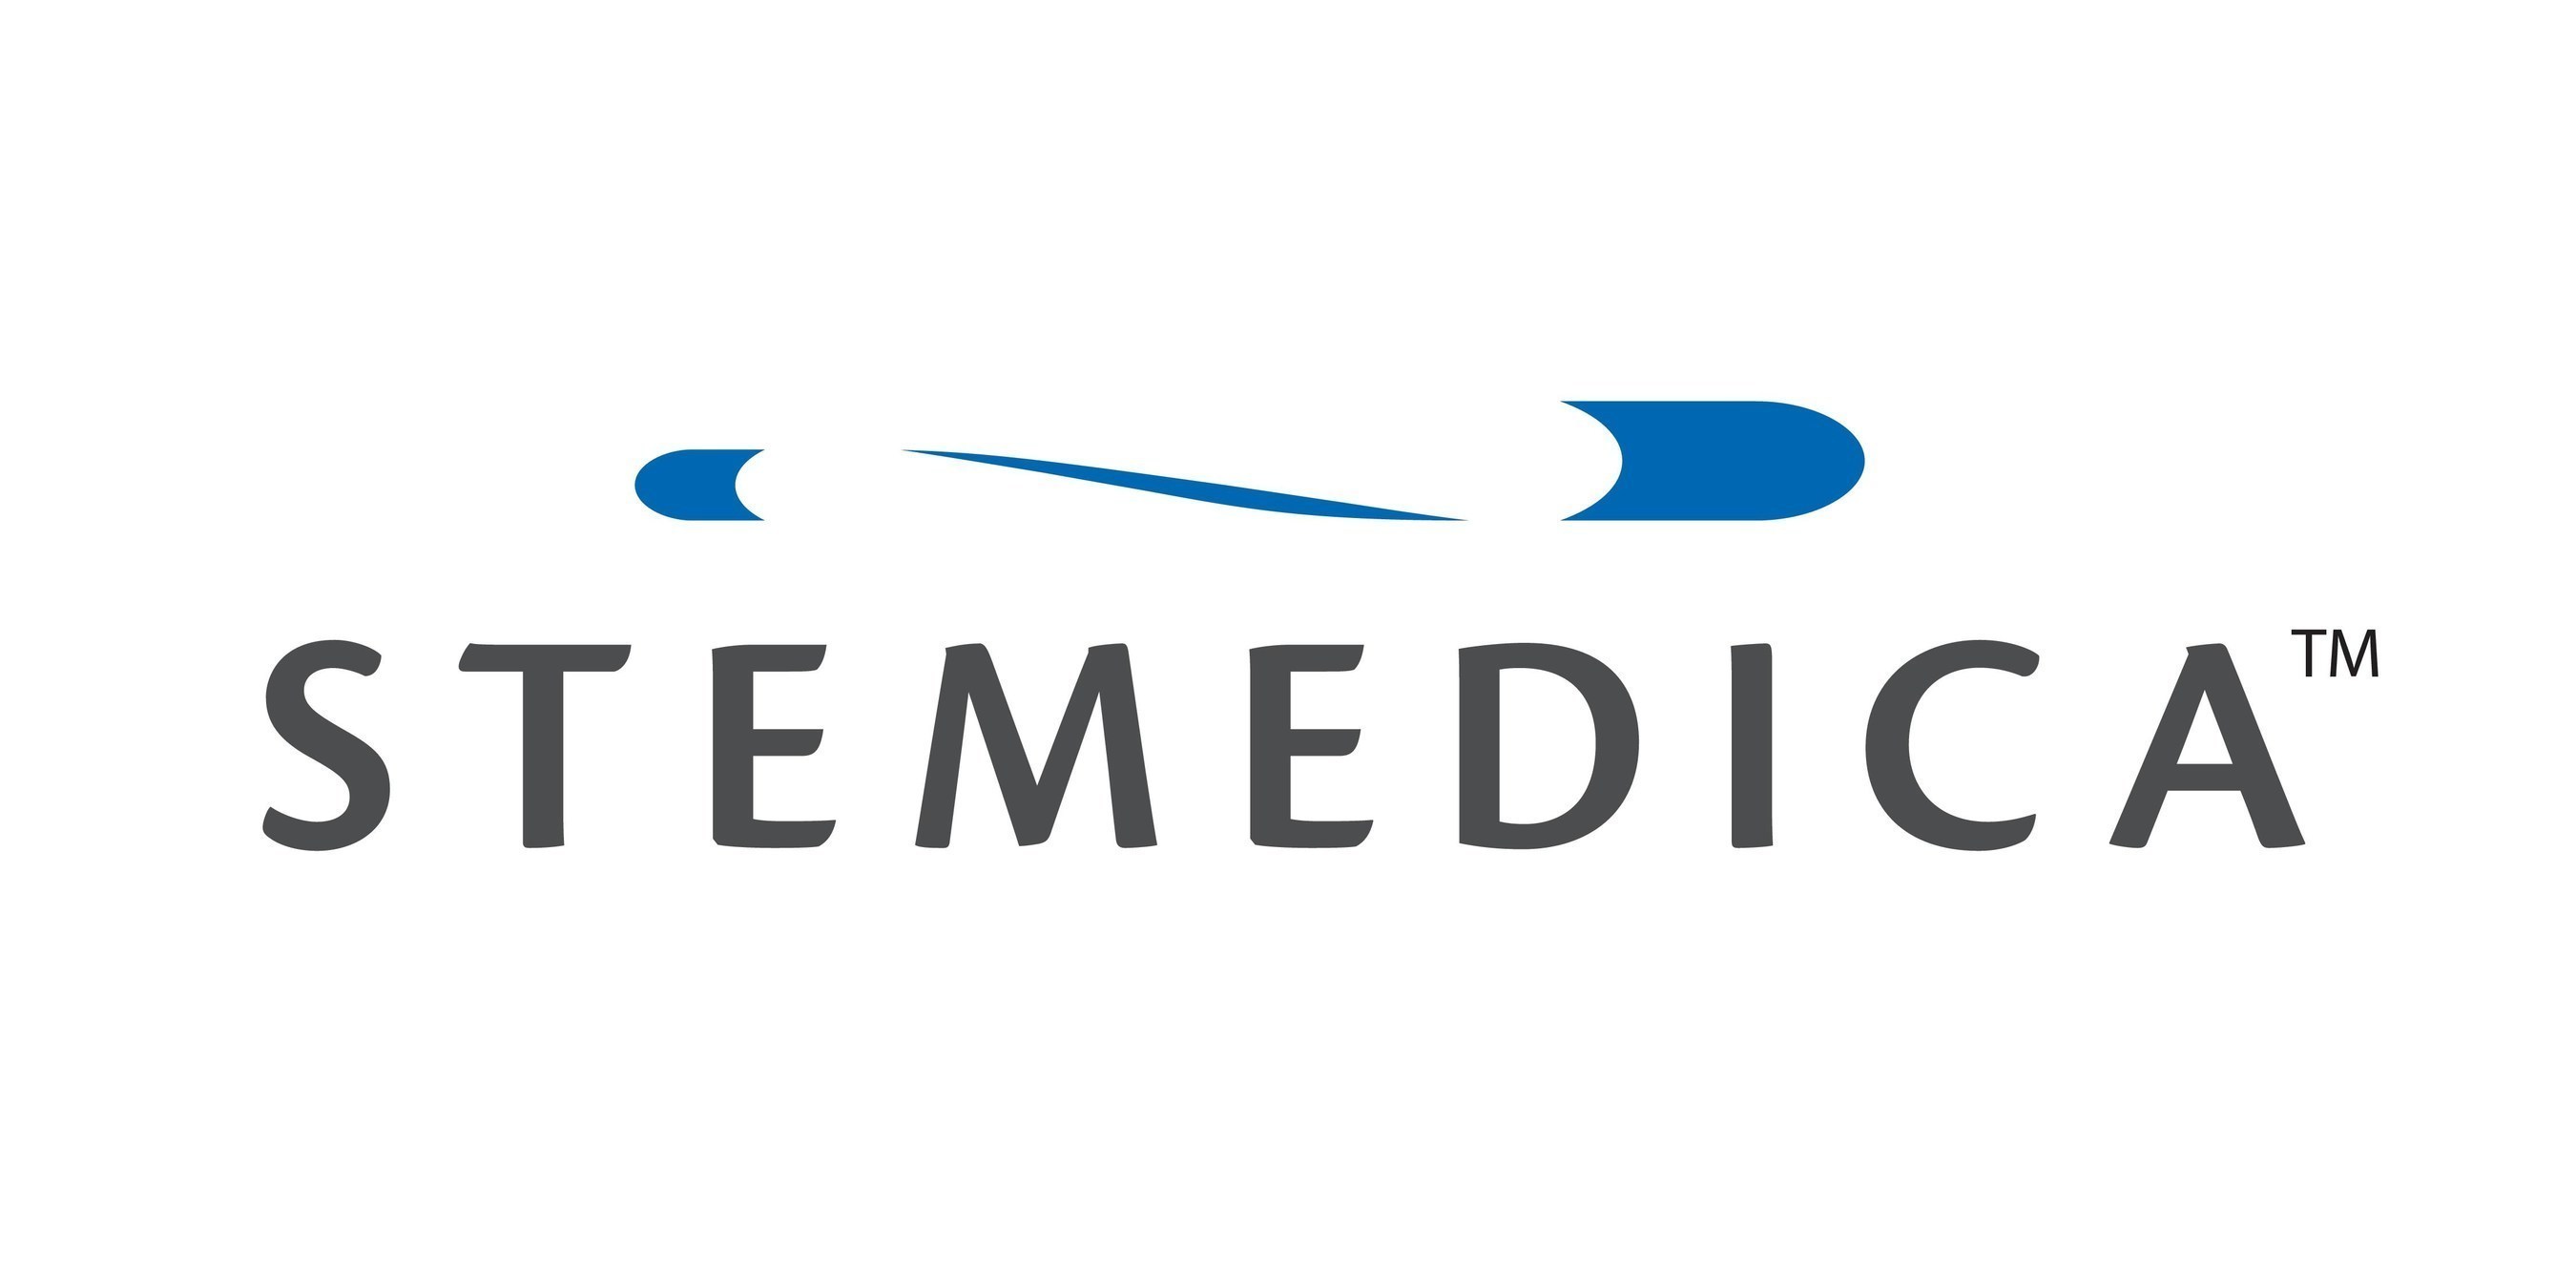 Stemedica Cell Technologies, Inc.